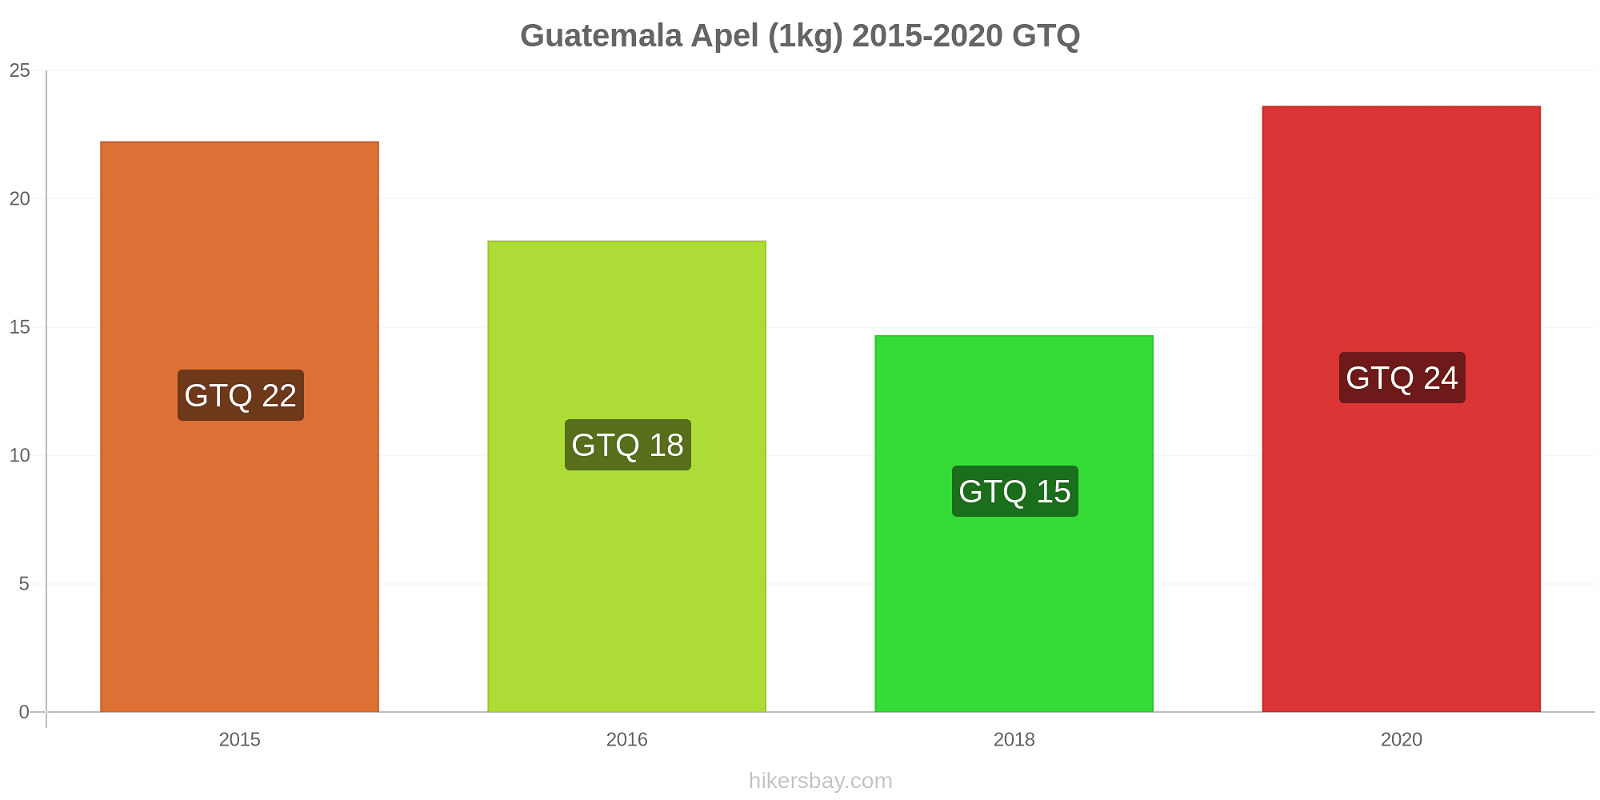 Guatemala perubahan harga Apel (1kg) hikersbay.com